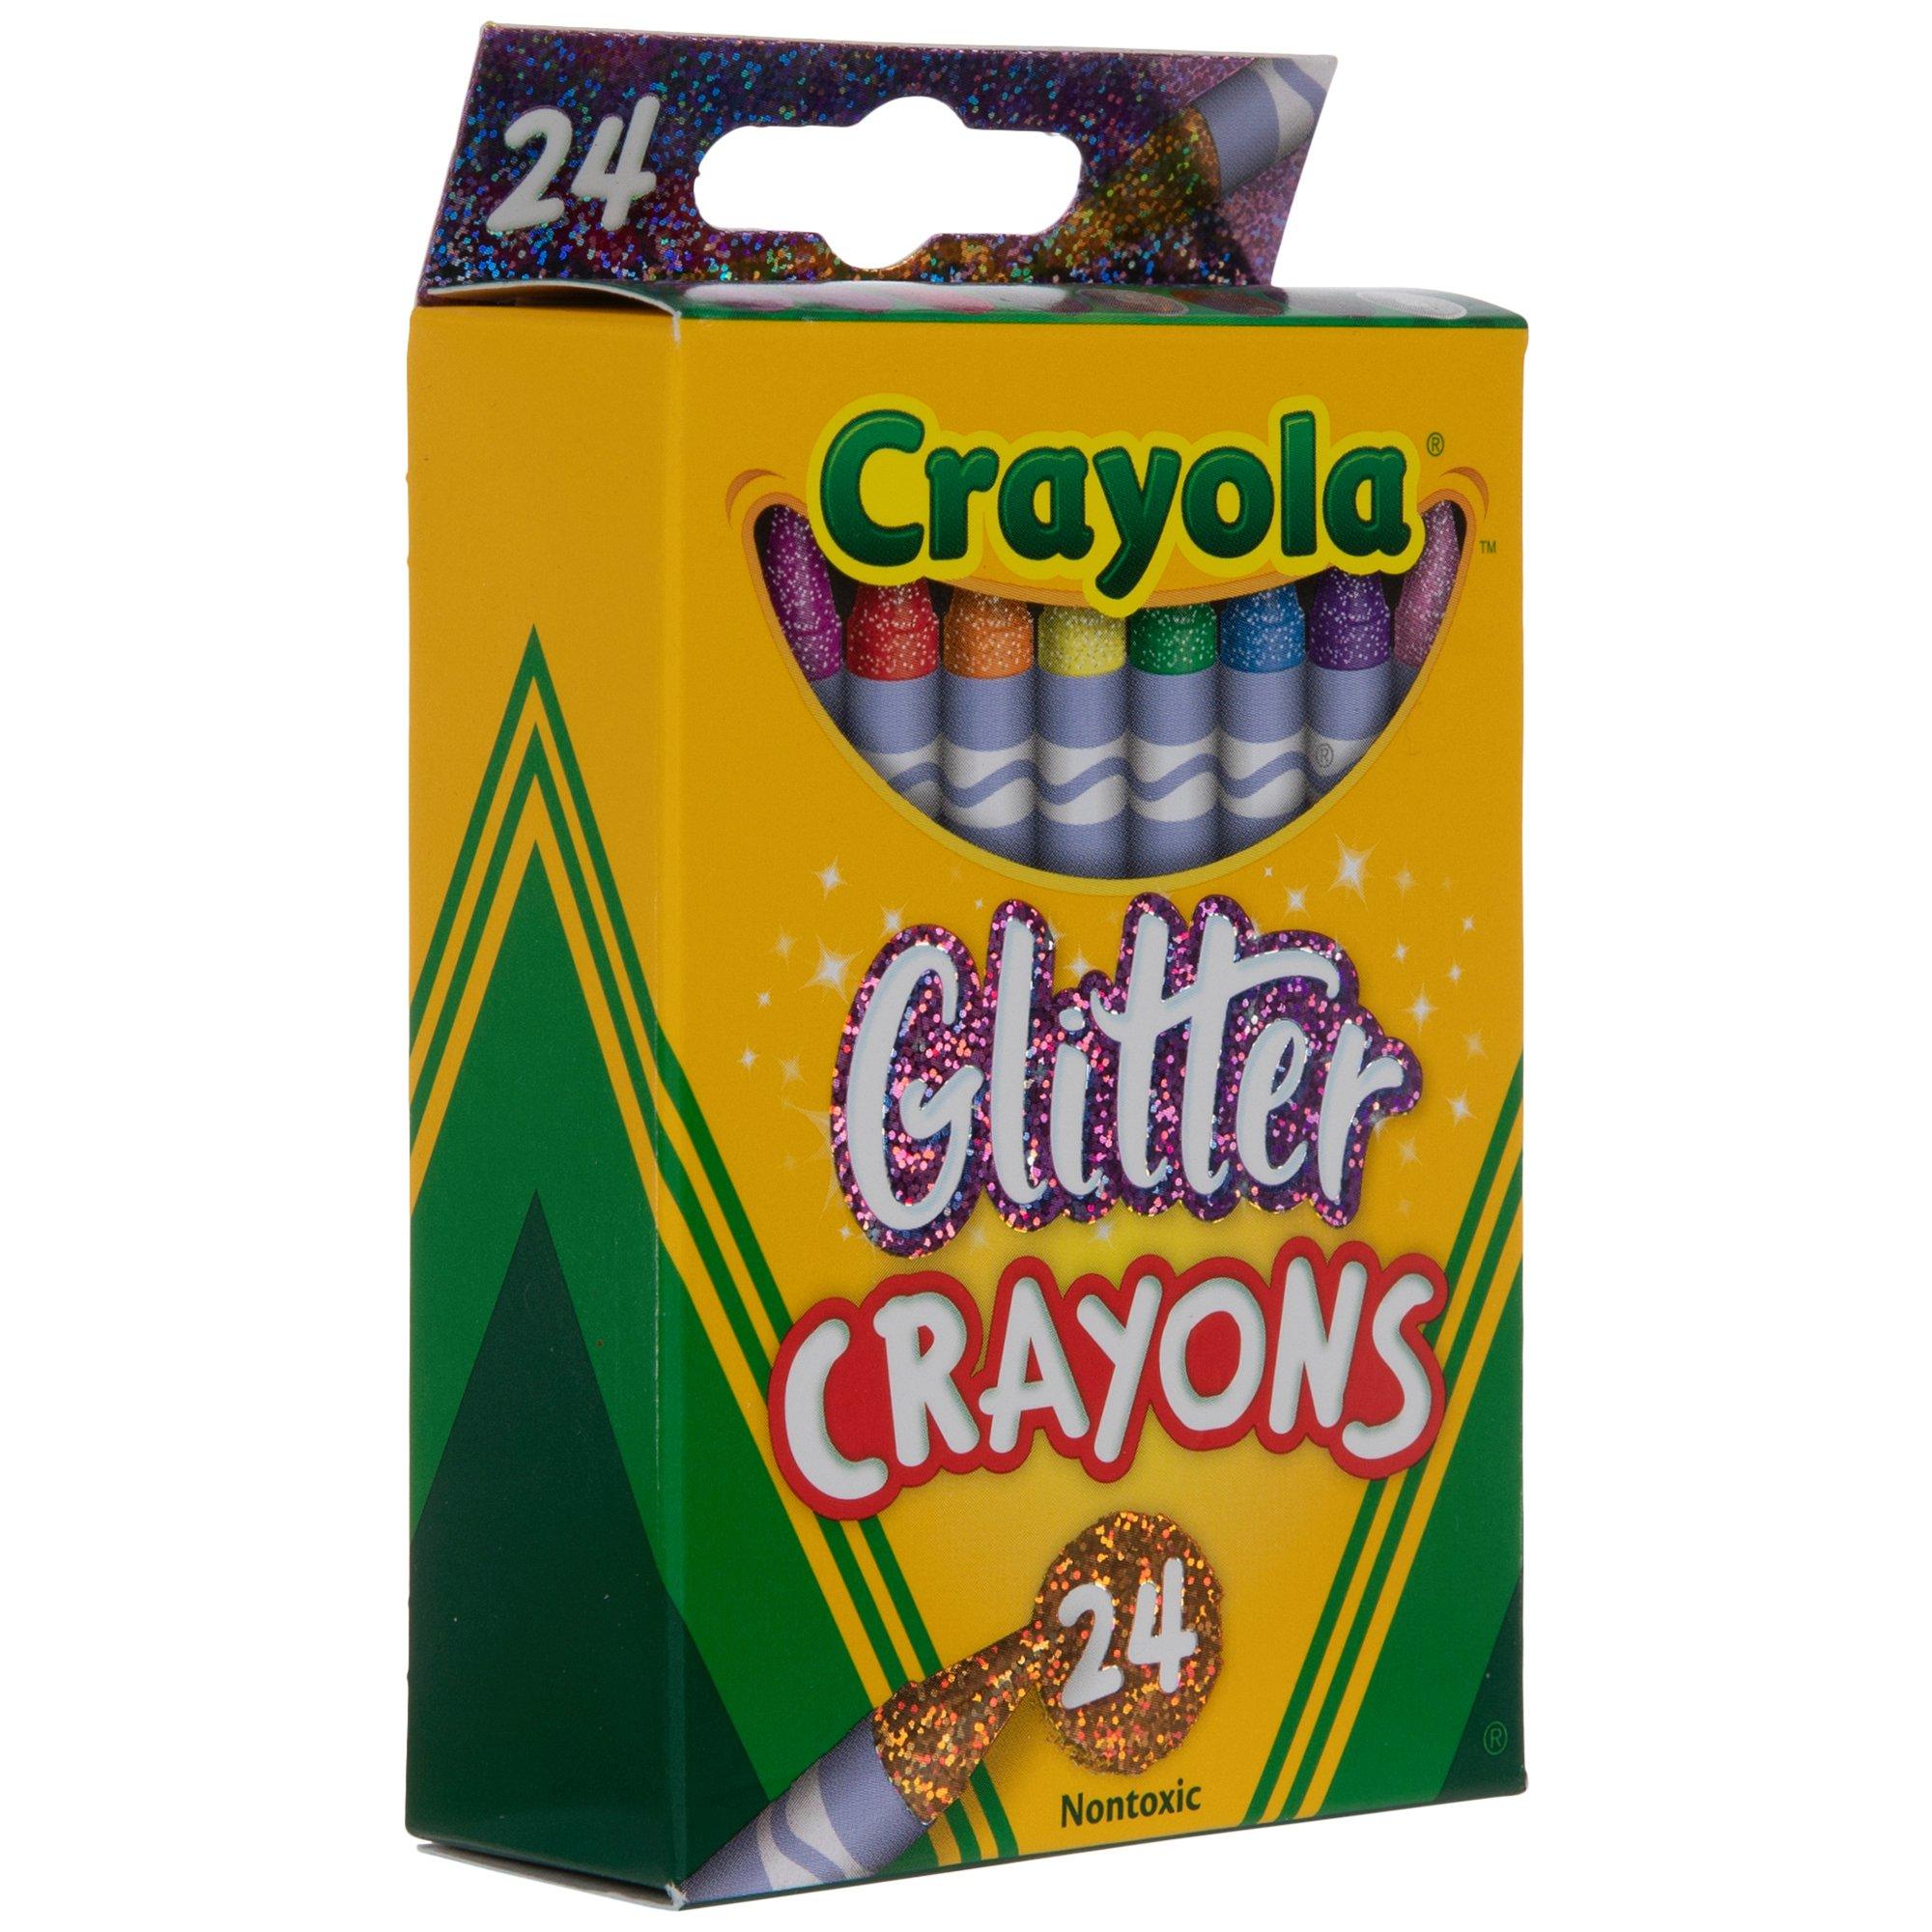 Jumbo Glitter Crayons